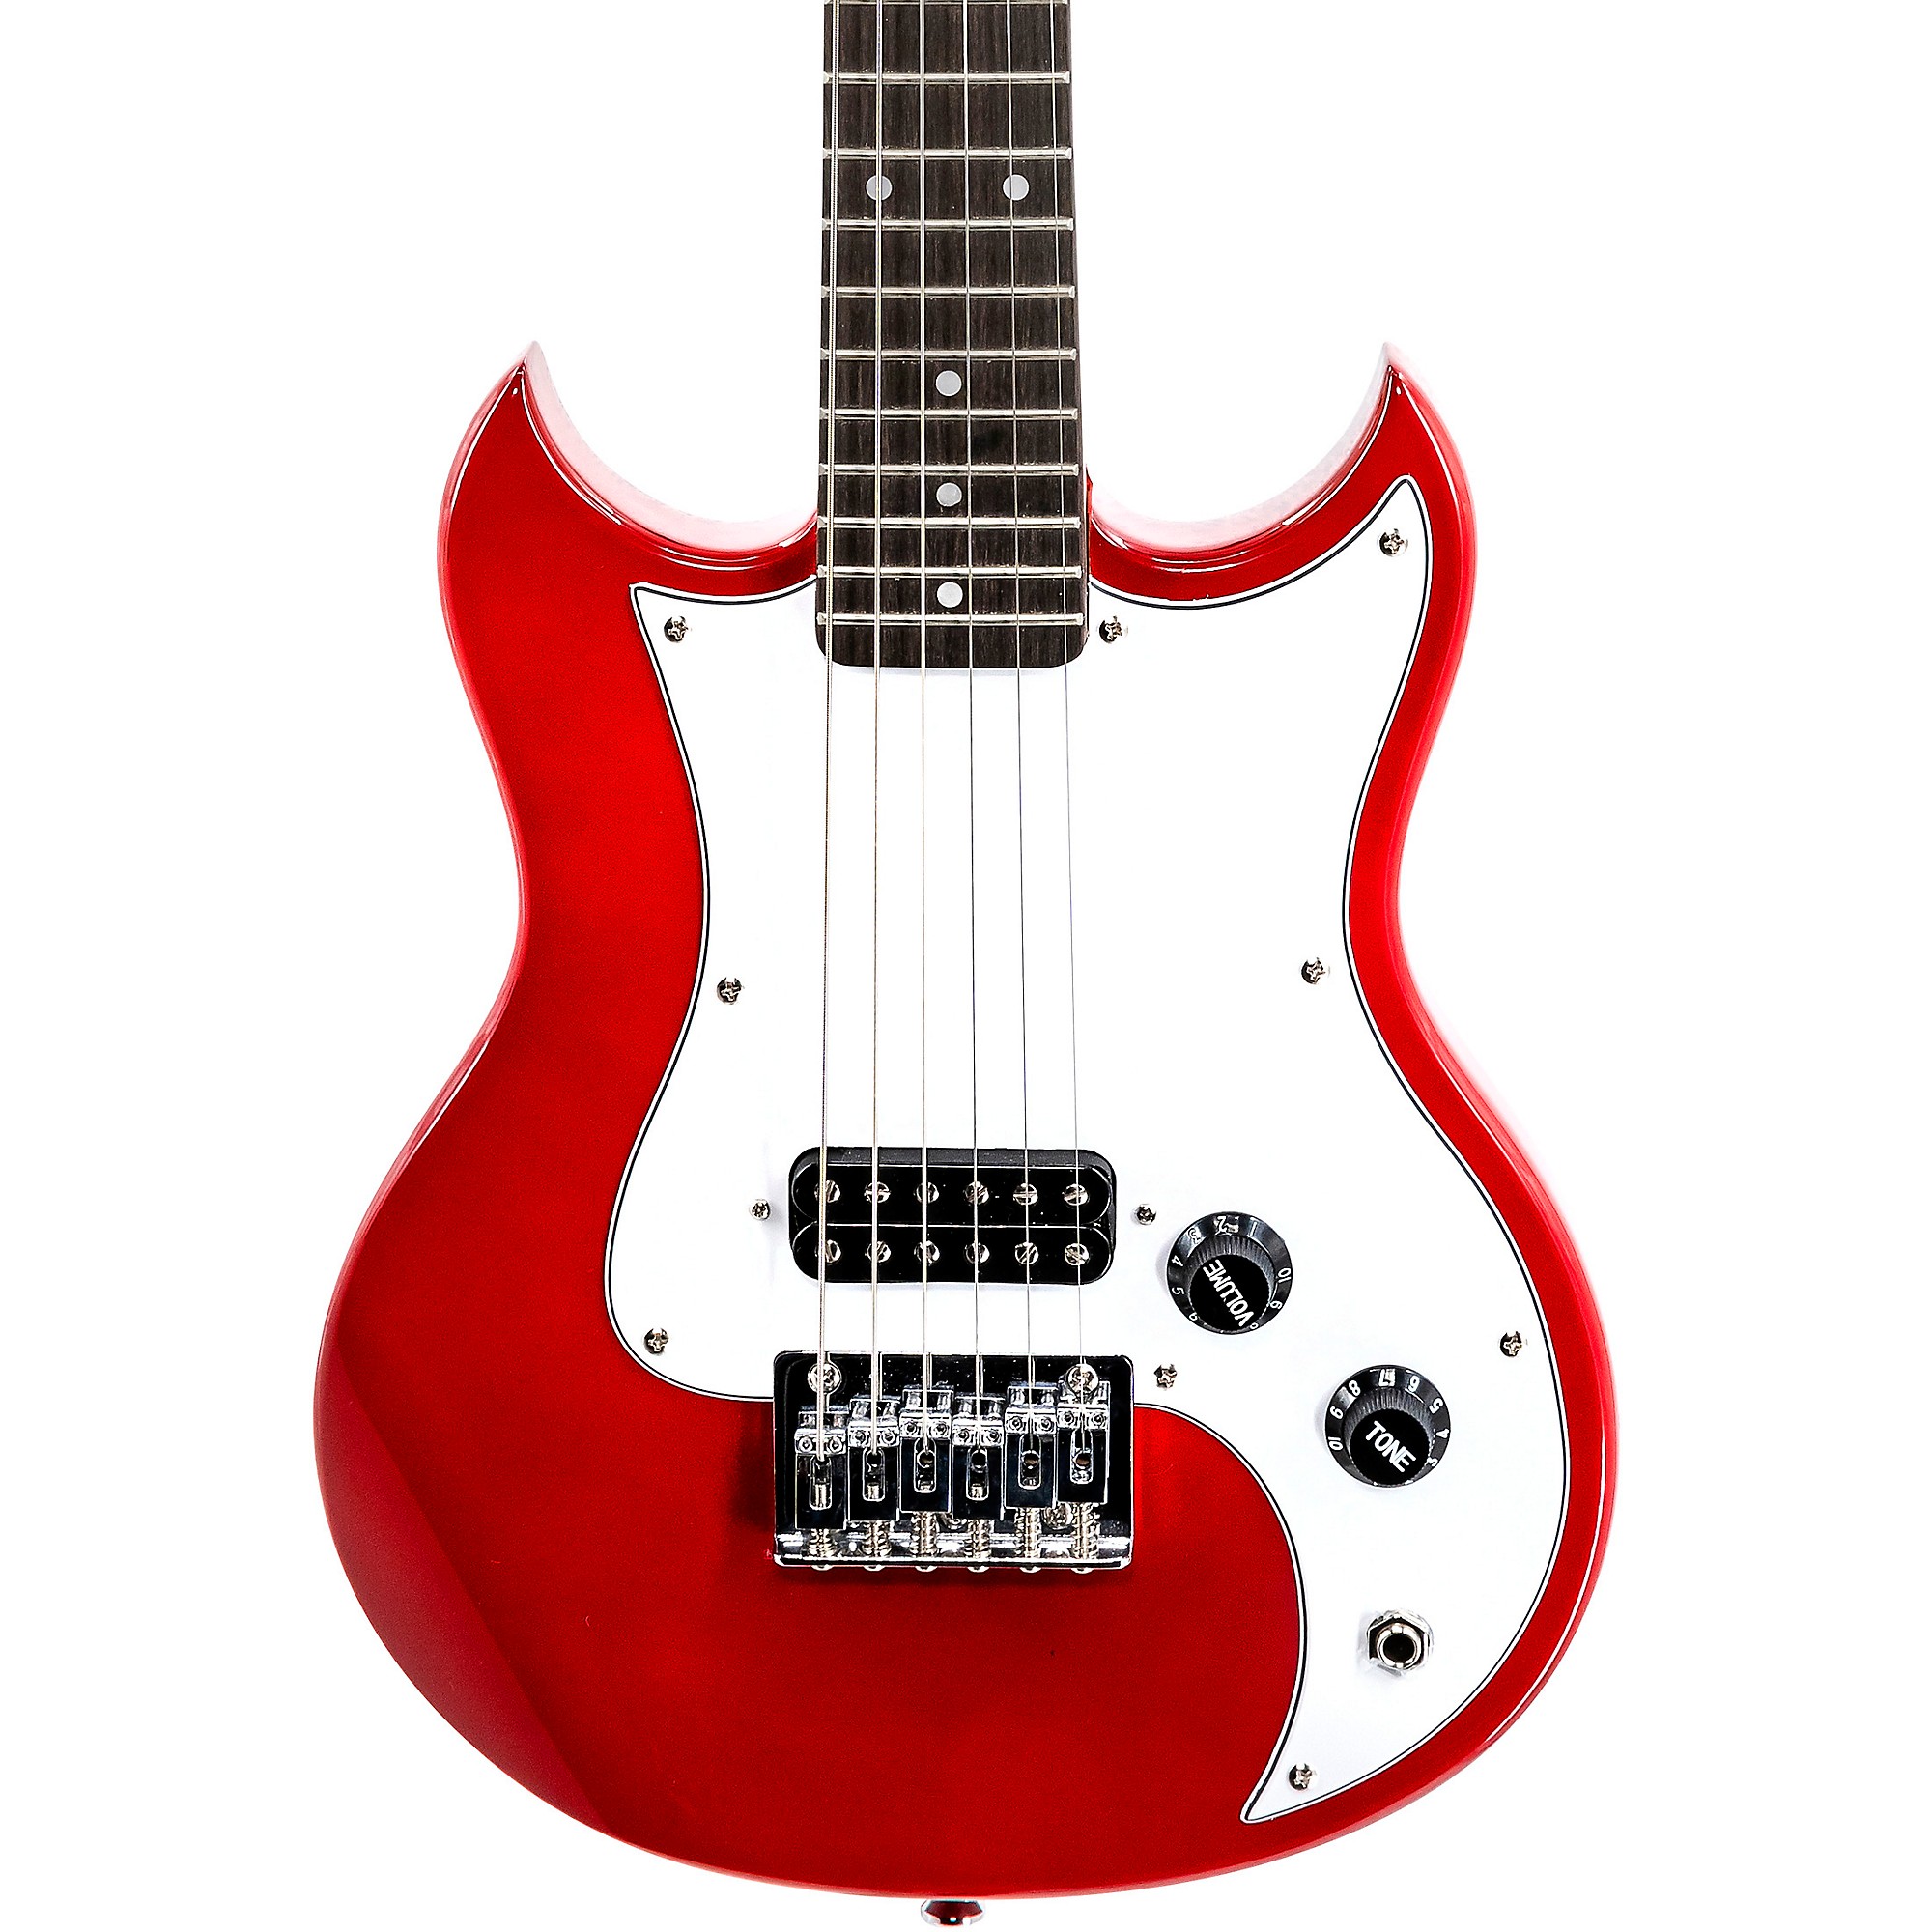 kort Erfaren person Postnummer VOX SDC-1 Mini Electric Guitar Red | Guitar Center